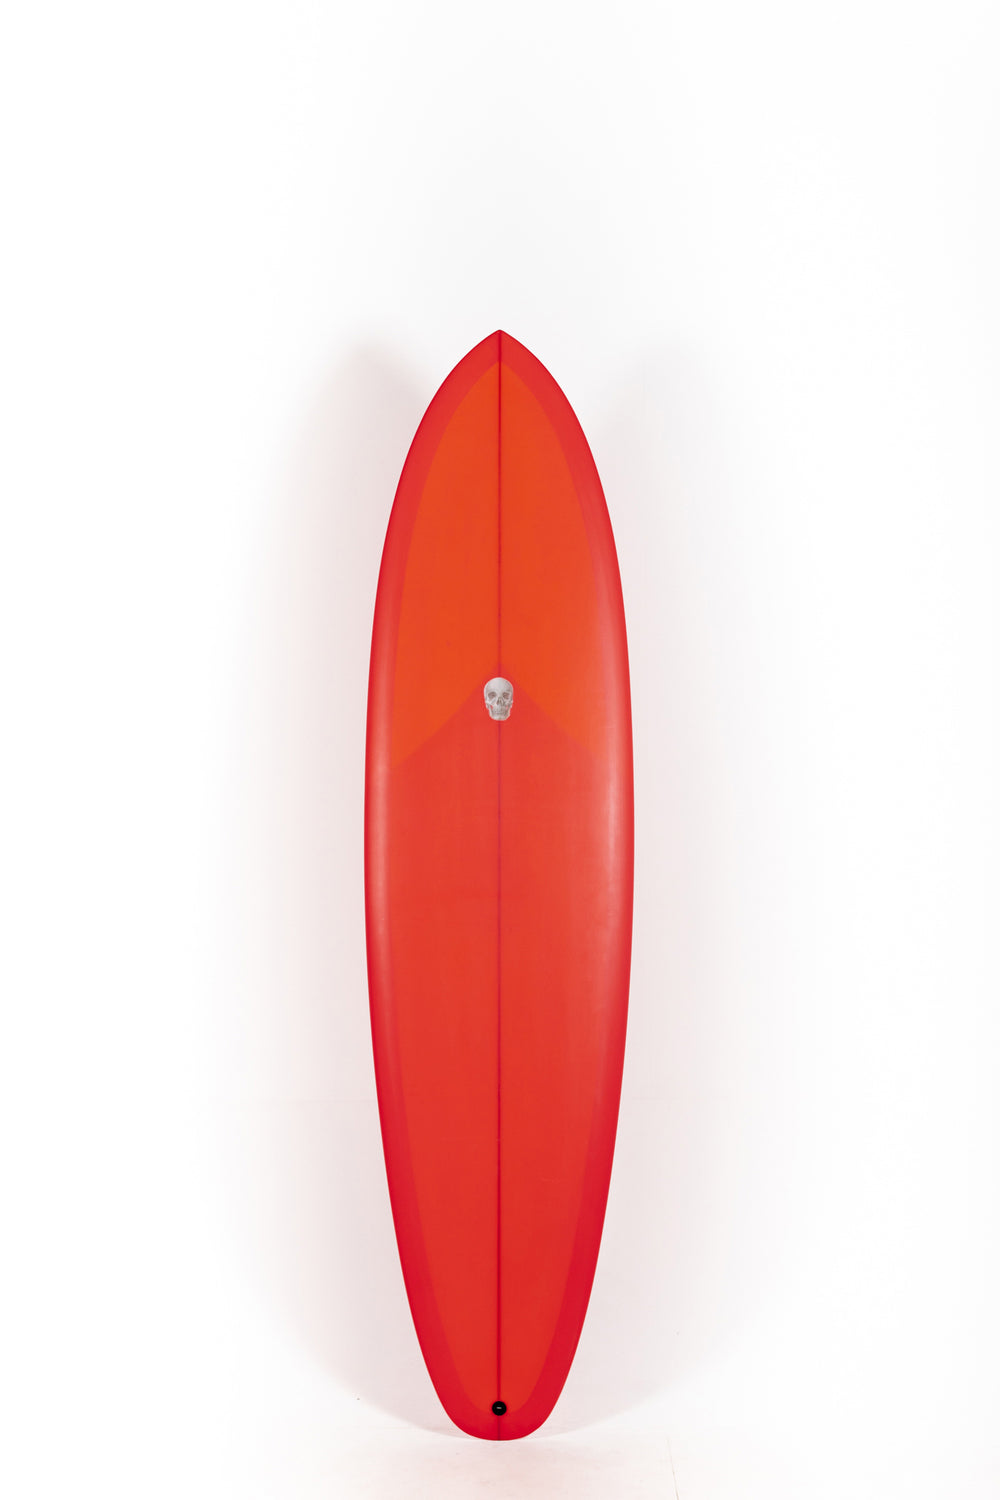 Pukas Surf Shop - Christenson Surfboards - TWIN TRACKER - 7'2